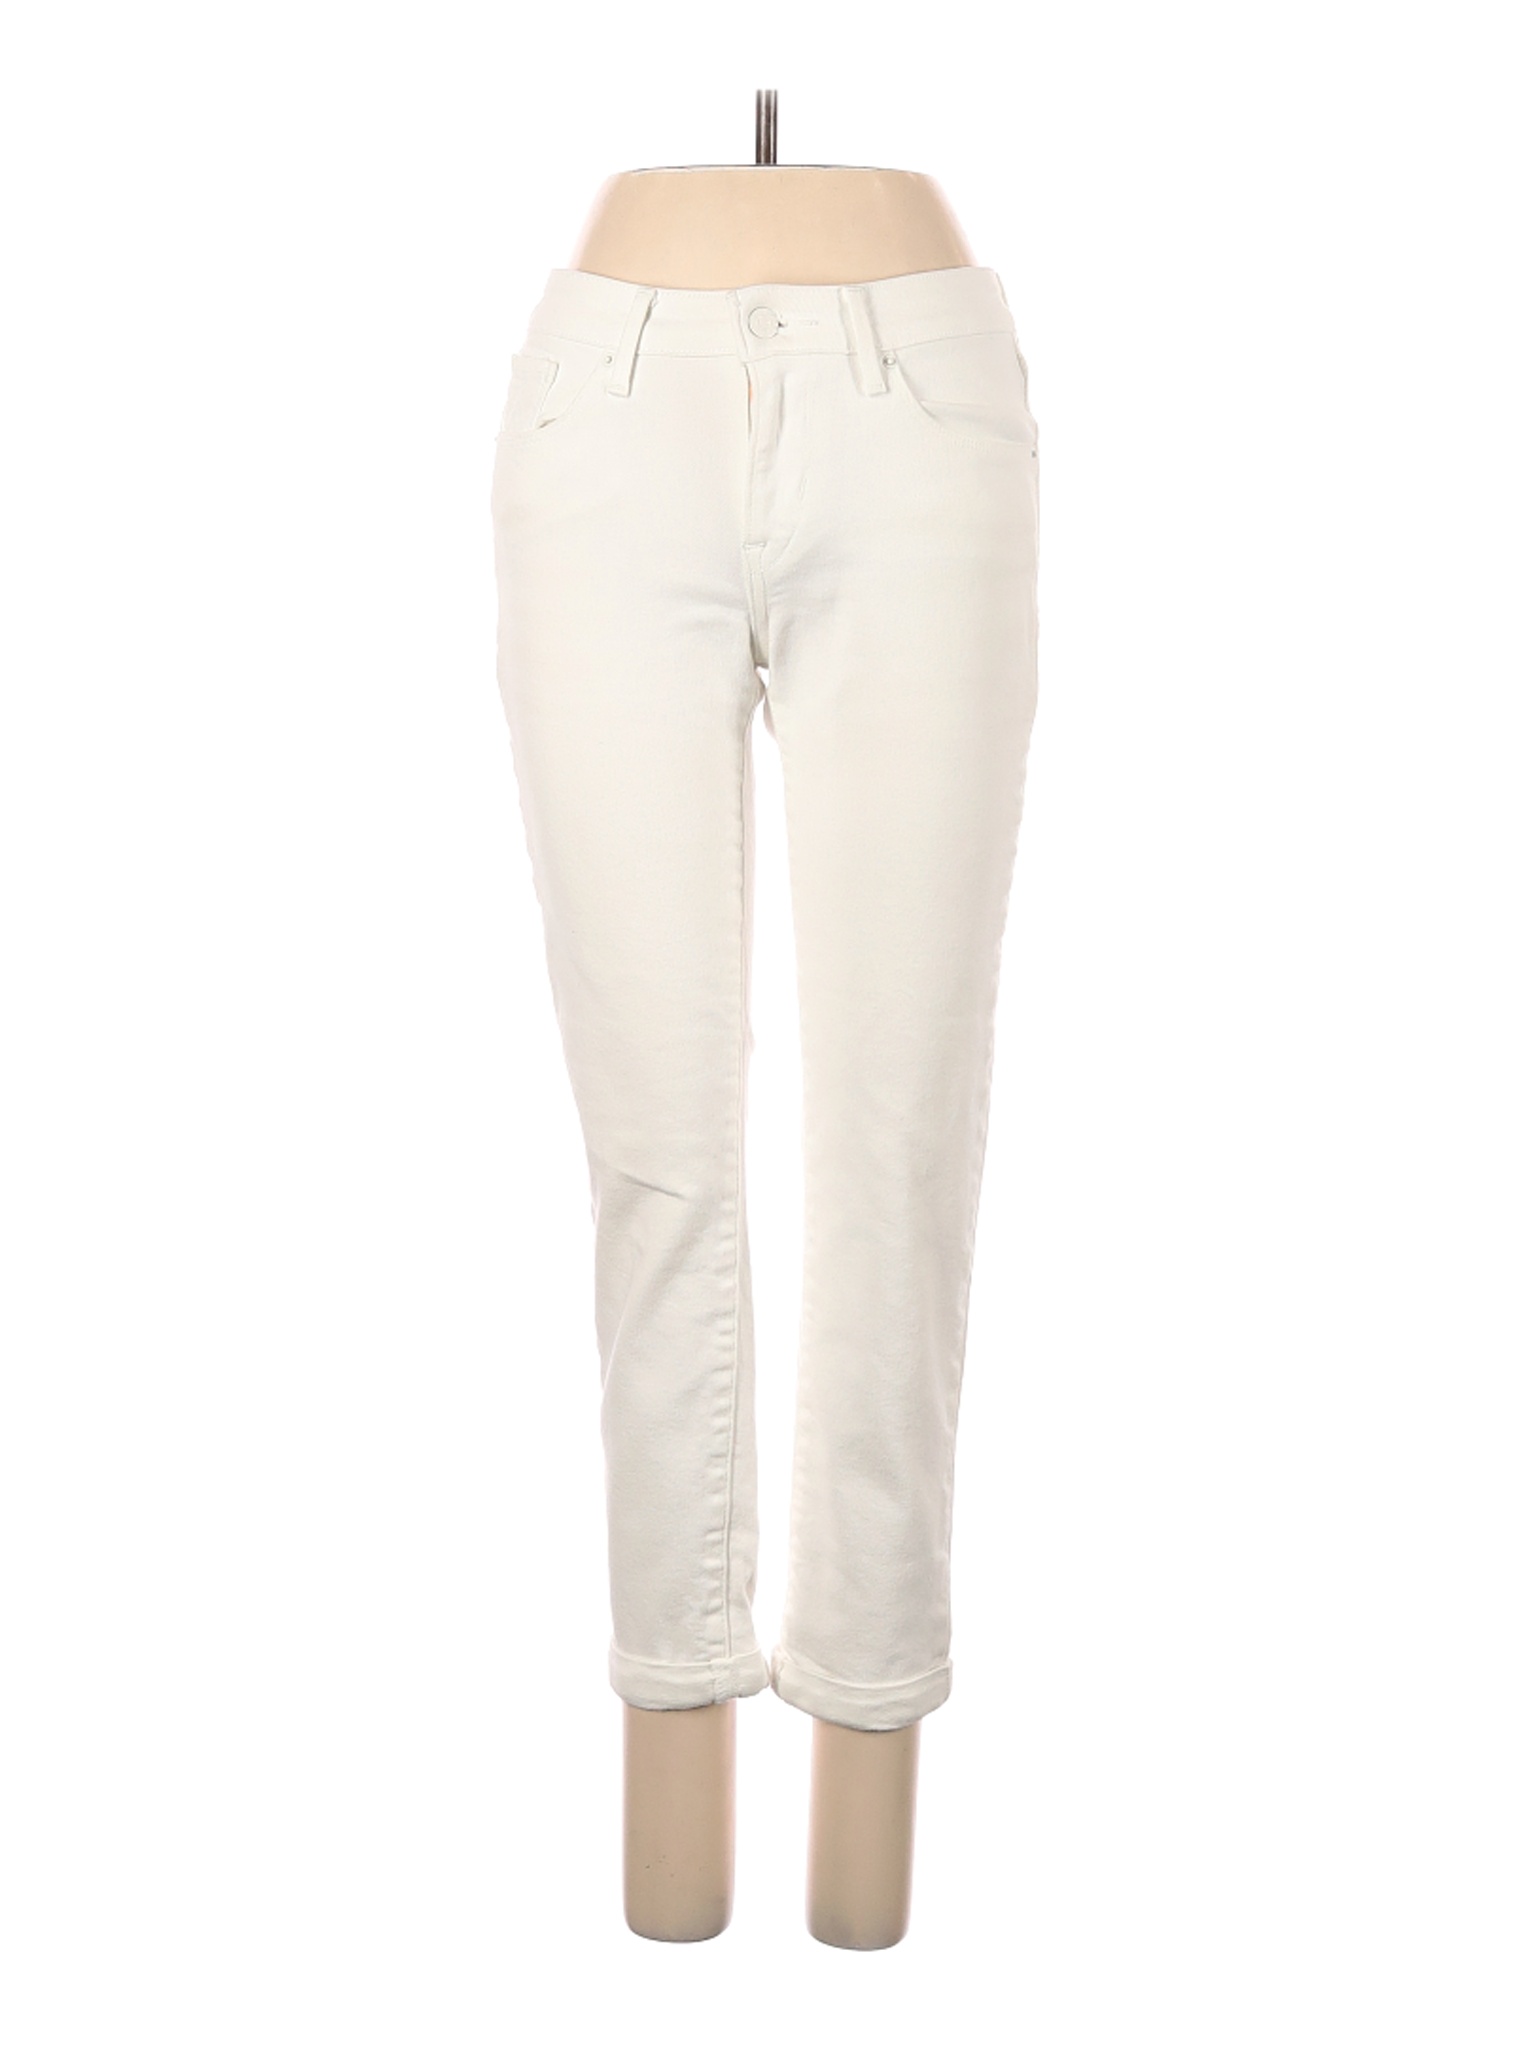 Levi's Women Ivory Jeans 26W | eBay